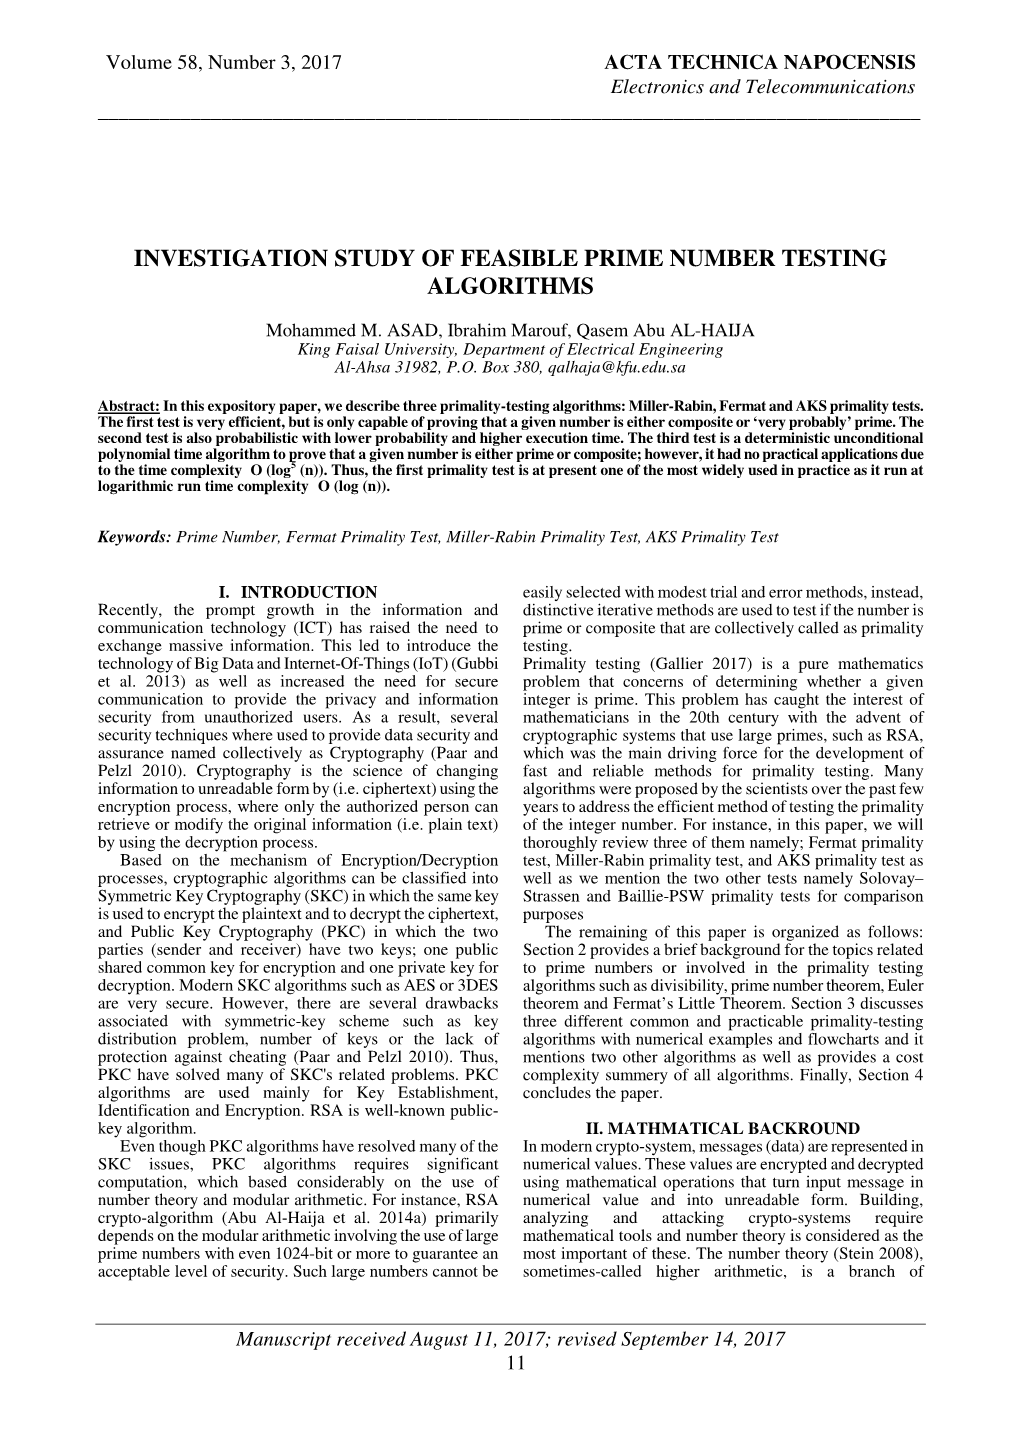 Investigation Study of Feasible Prime Number Testing Algorithms